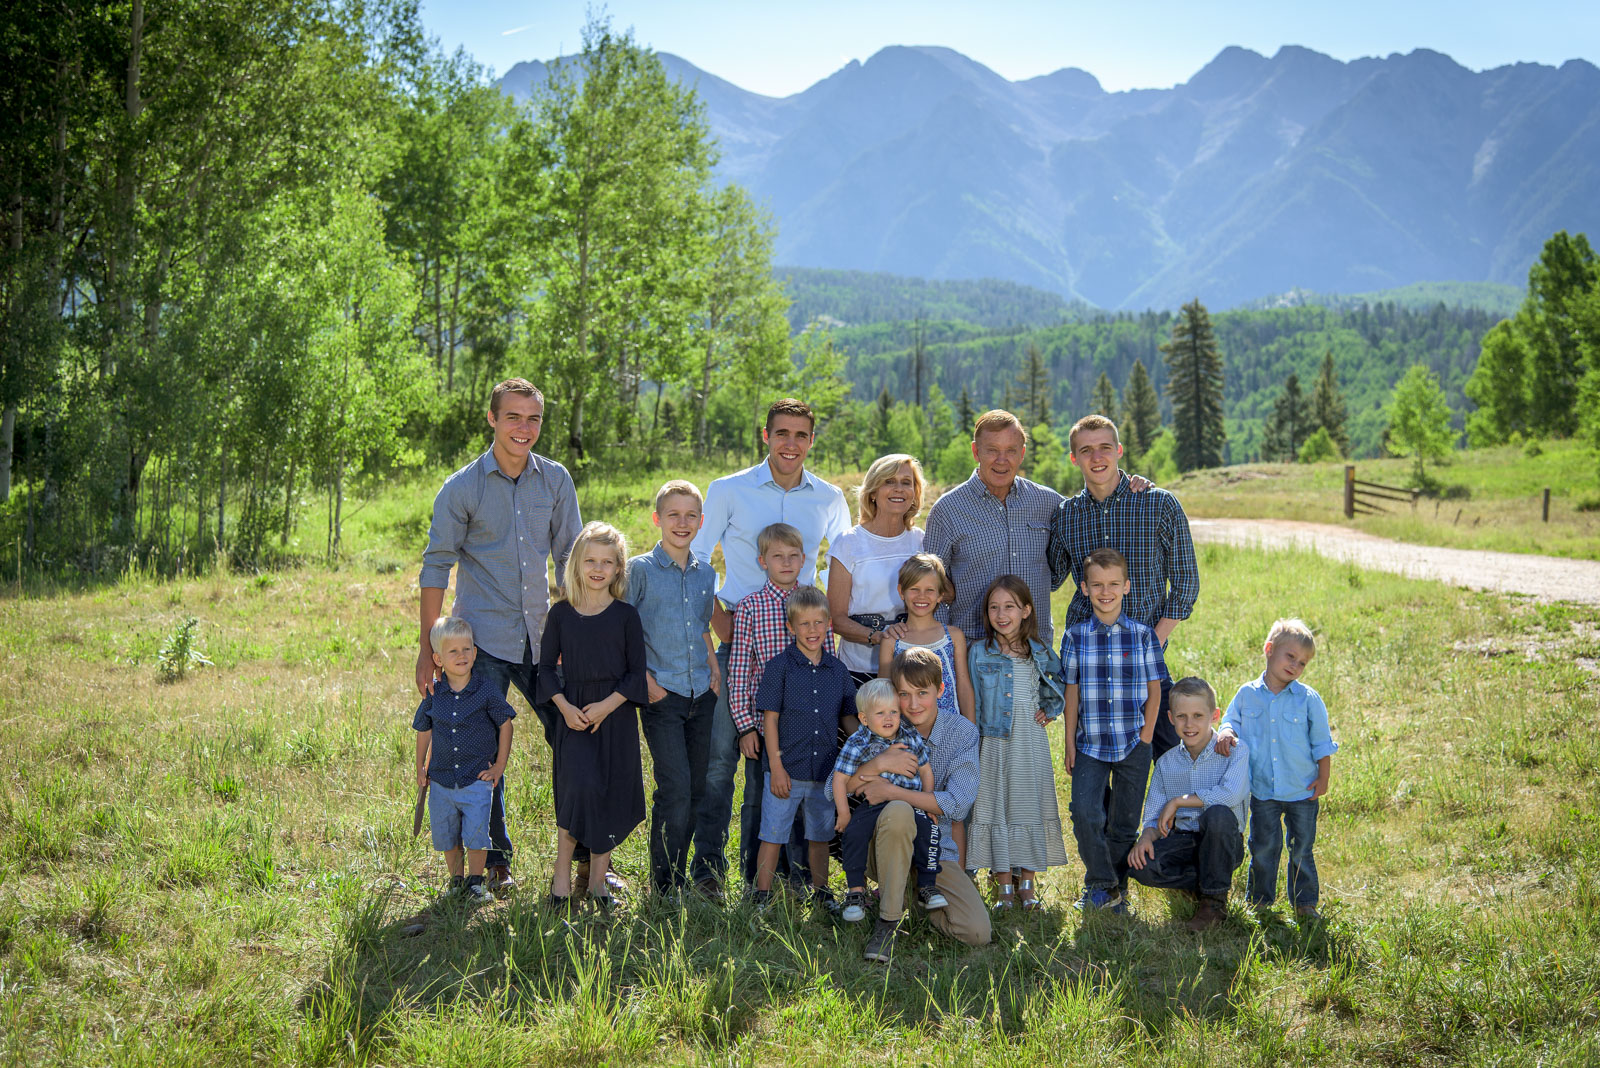 Summer Family Portraits in Durango